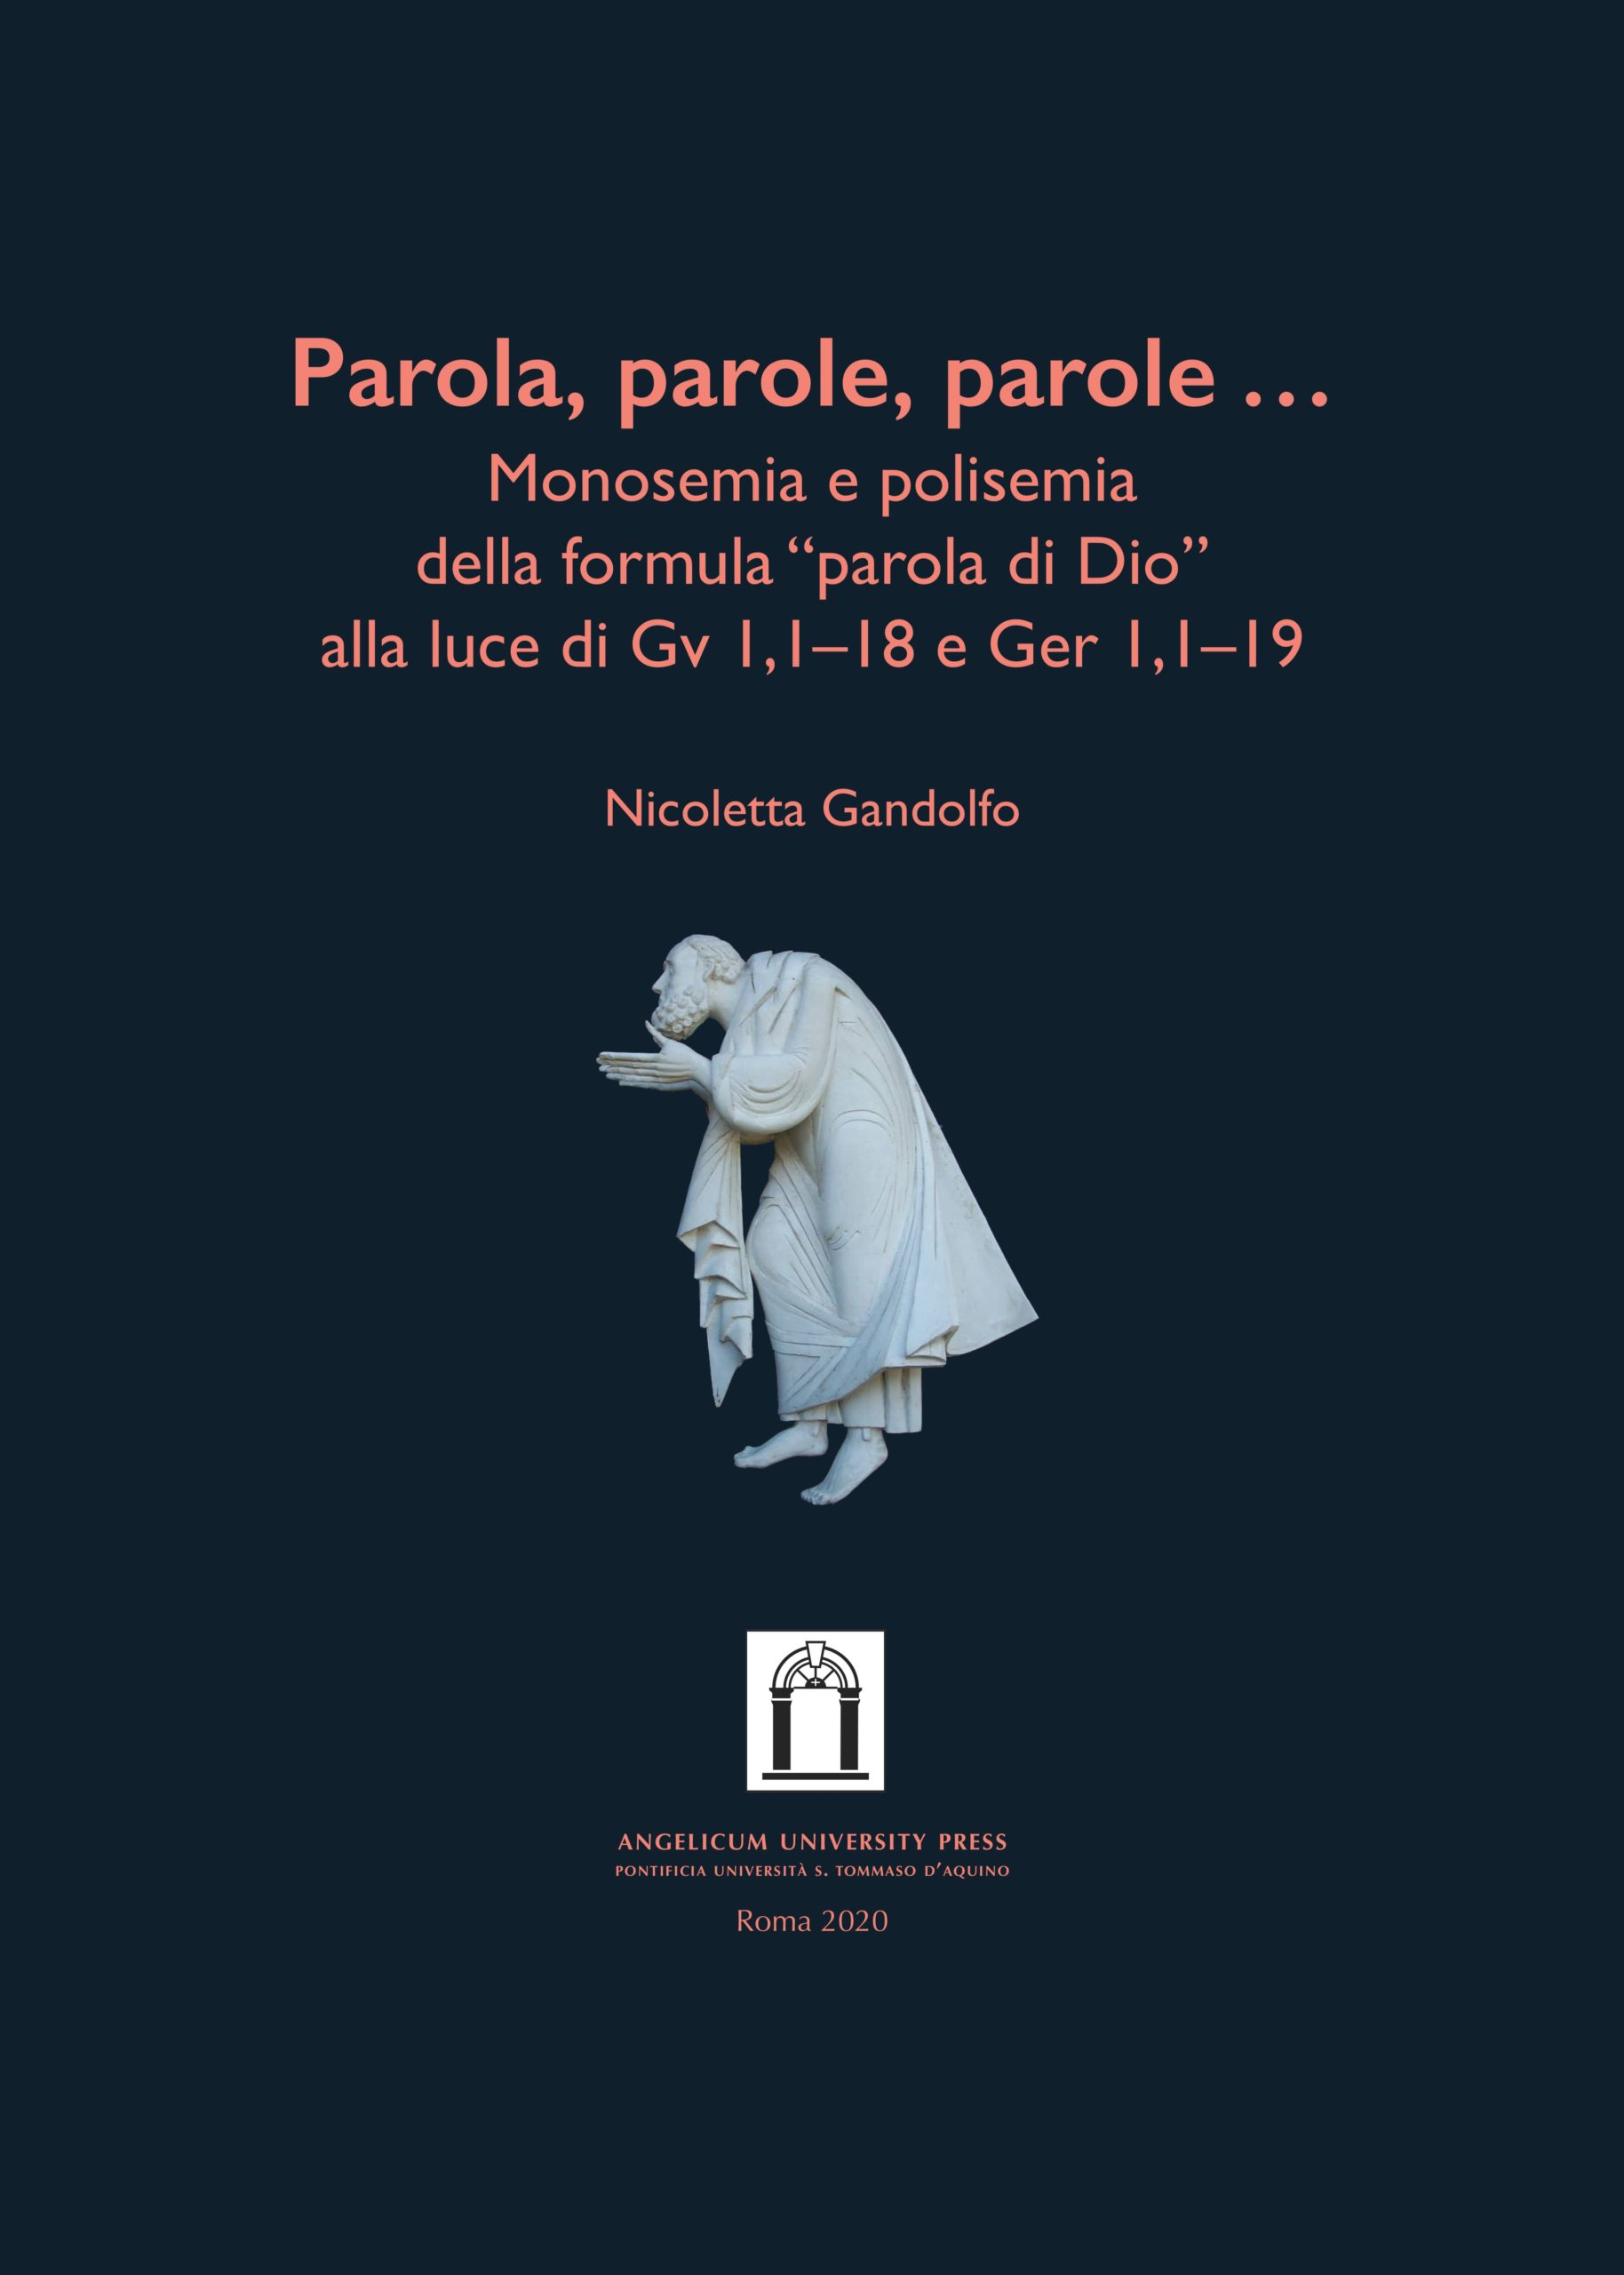 Parole, parole, parole… book cover